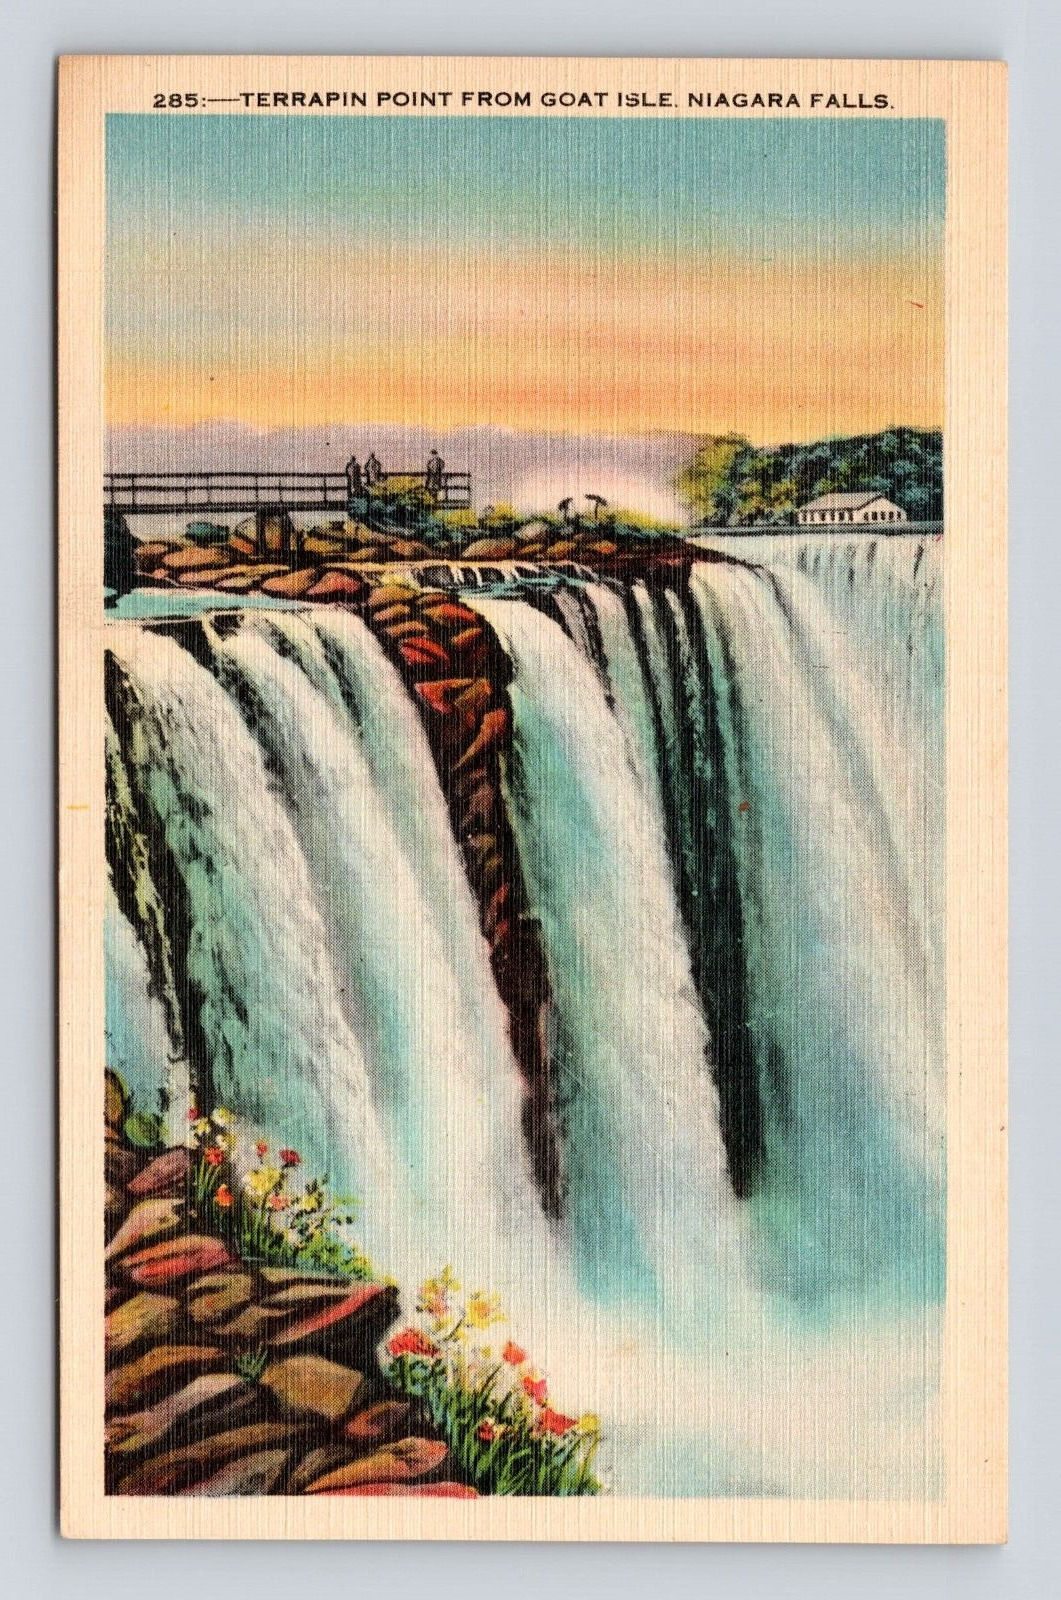 Old Postcard American Niagara Falls Goat Isle Terrain Point 1940s